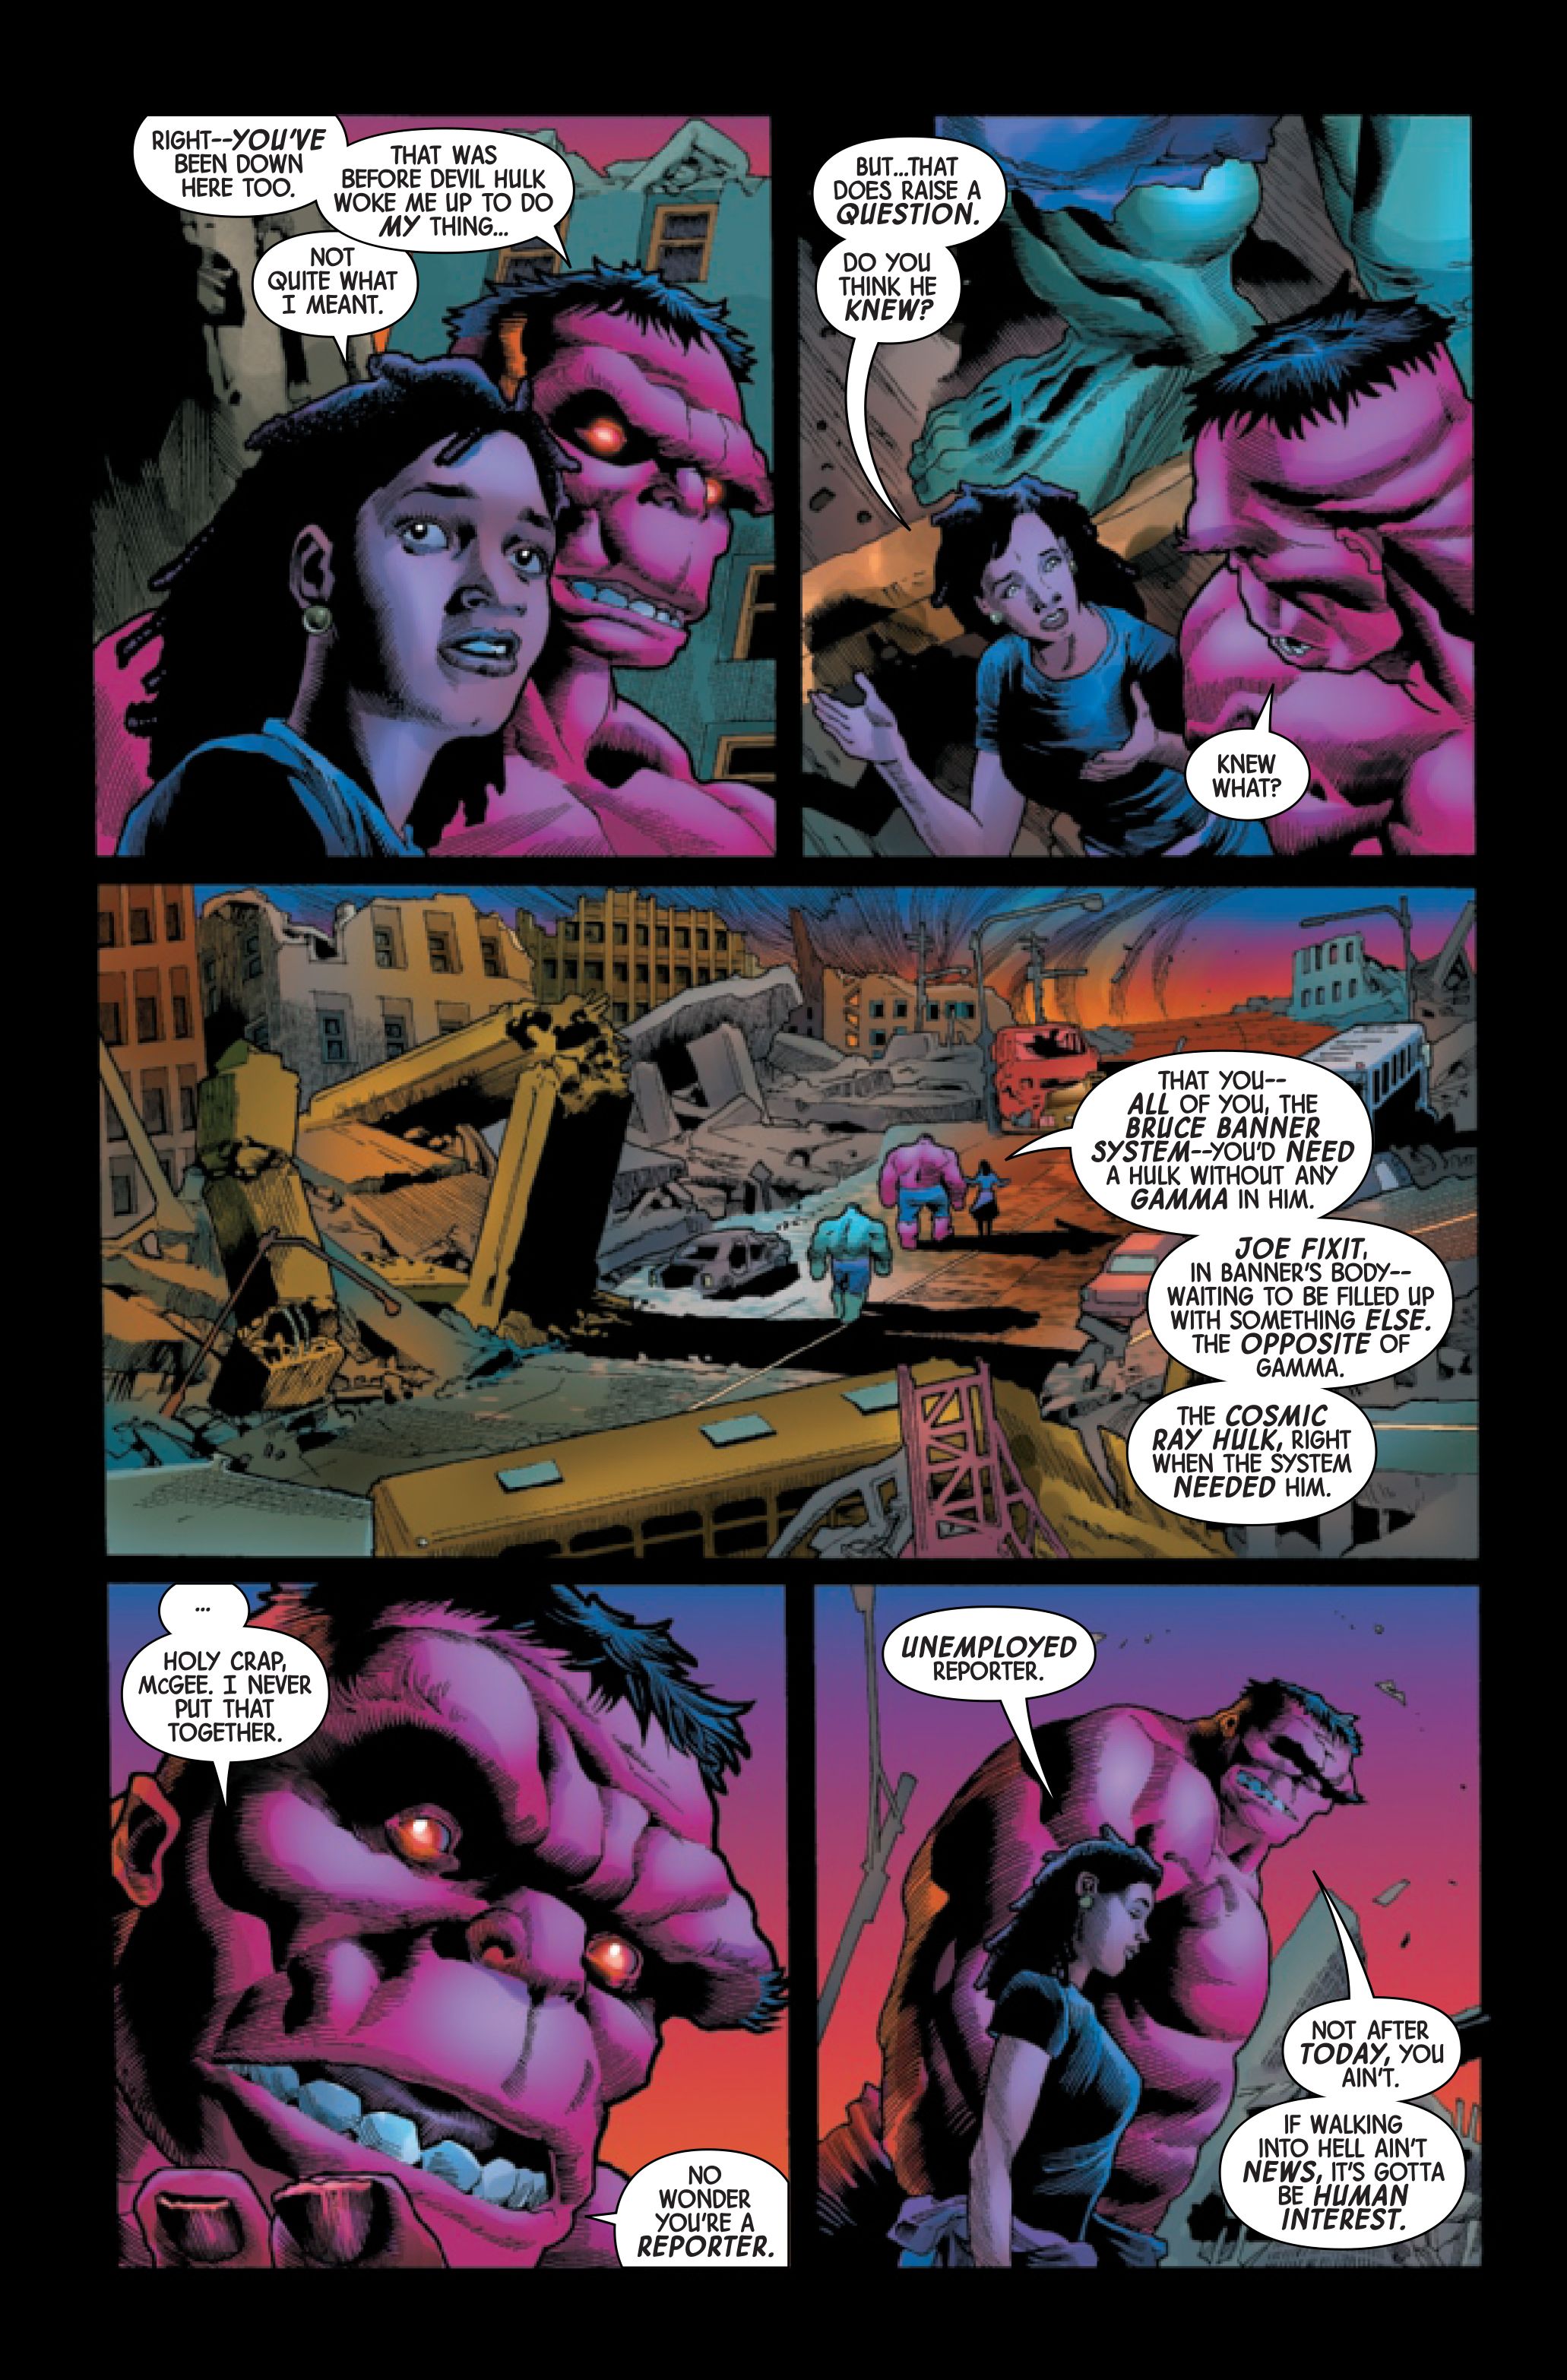 Page 2 of Hulk #50, by Al Ewing and Joe Bennett.